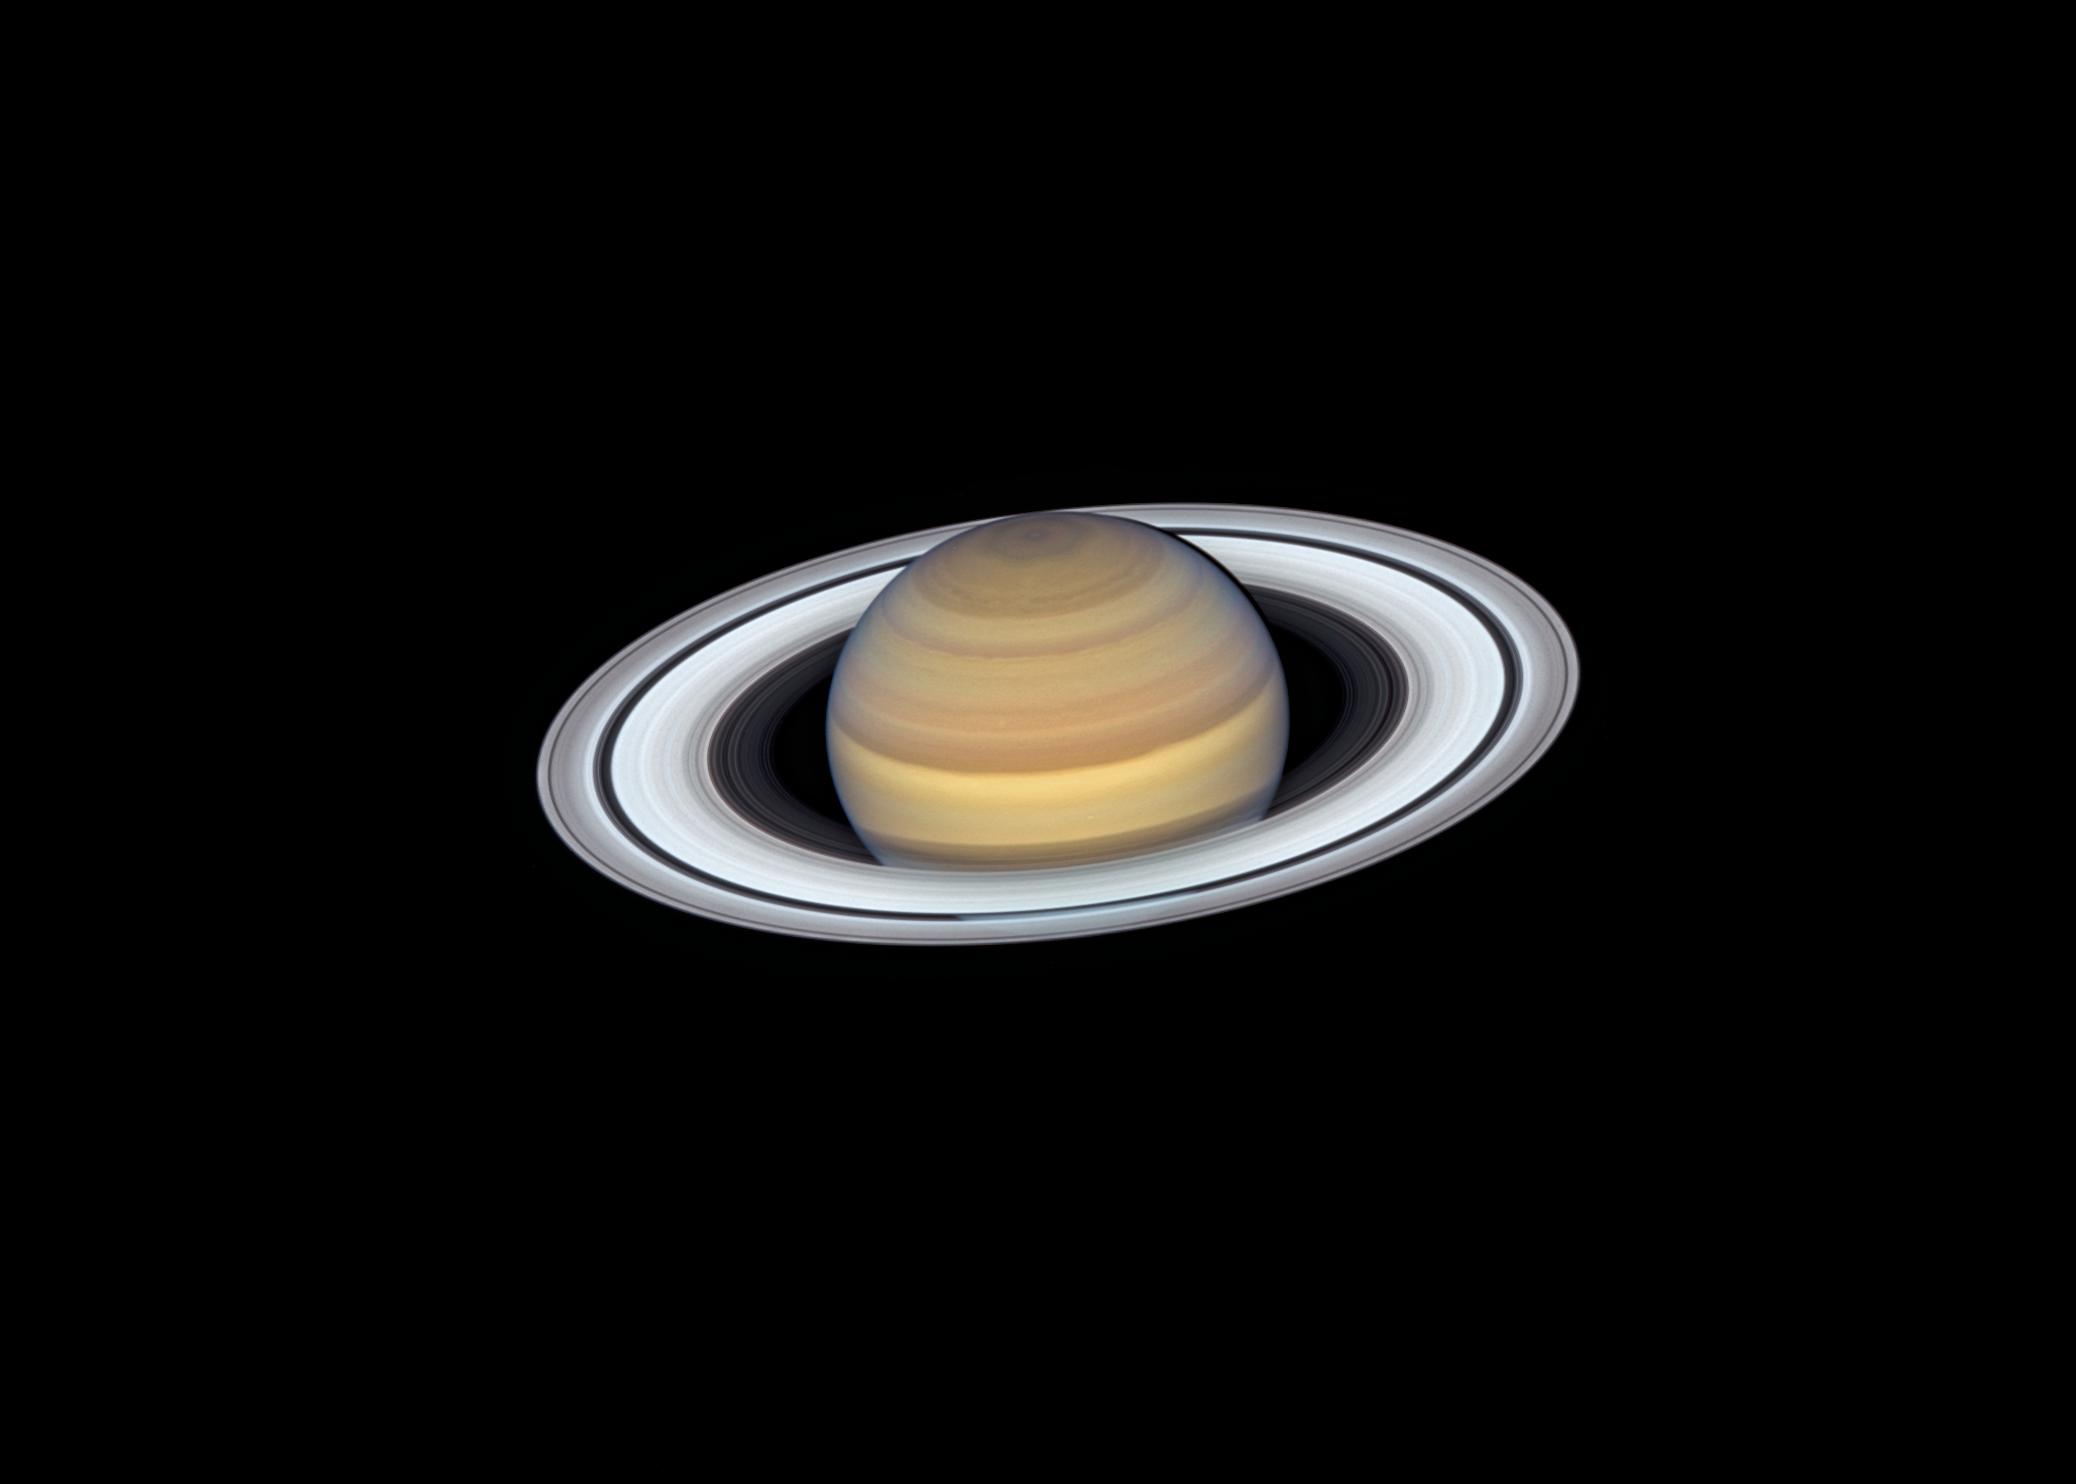 Image of Saturn taken by the Hubble Telescope (Source: NASA/ESA/A. Simon)